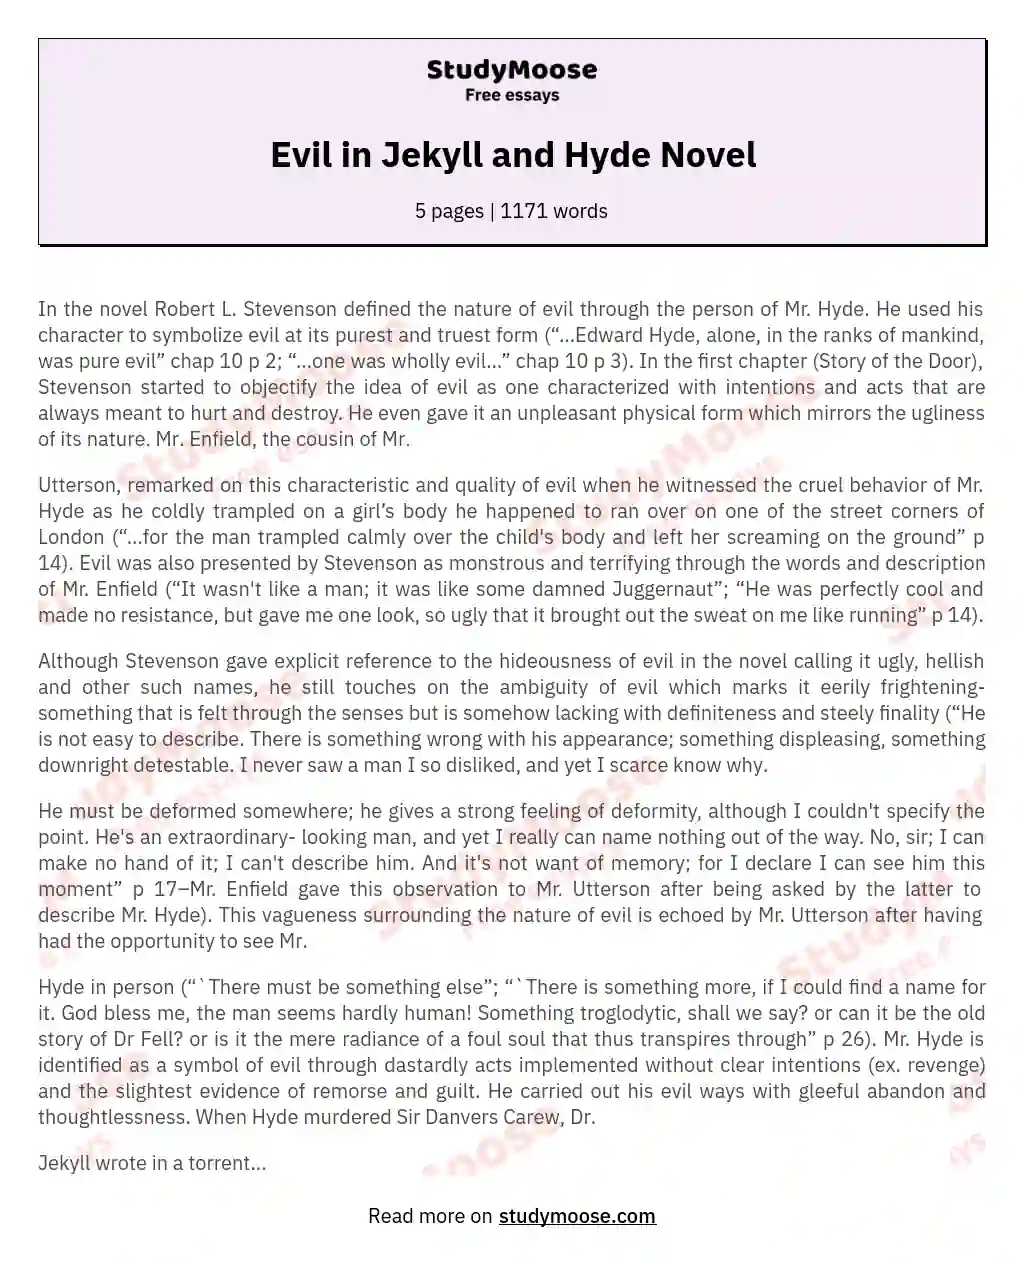 Evil in Jekyll and Hyde Novel essay